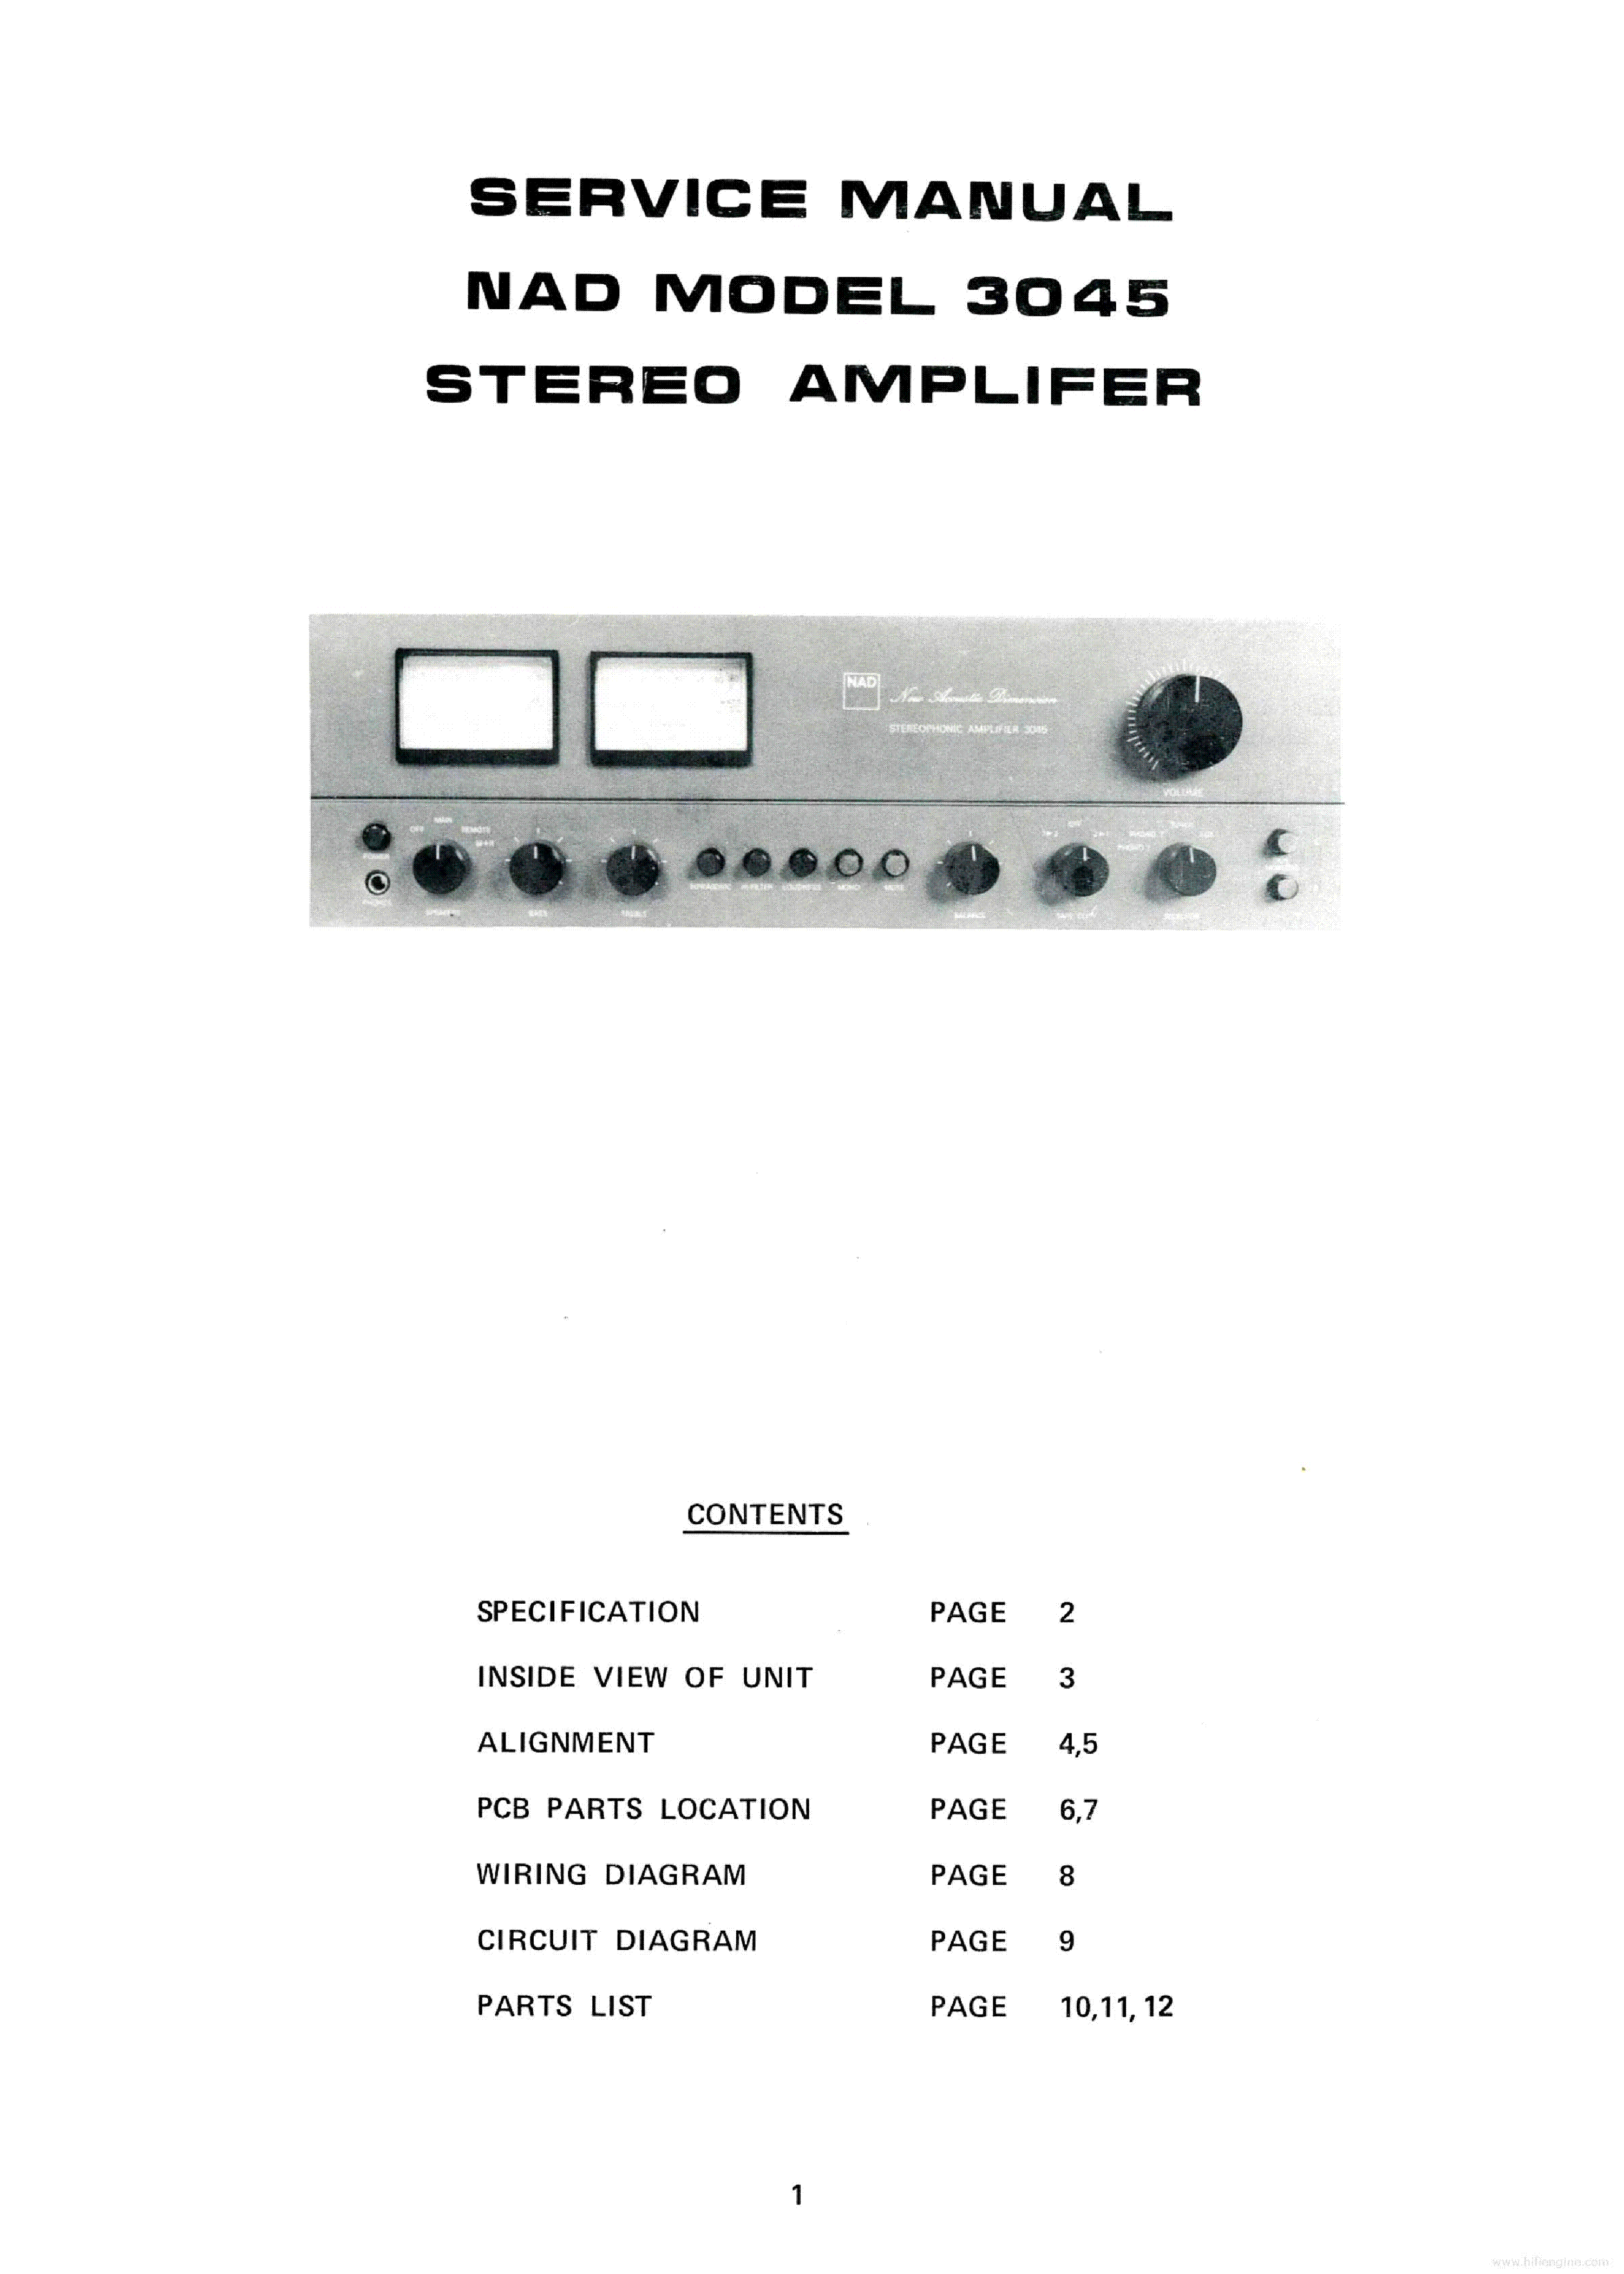 NAD 3045 SM service manual (1st page)